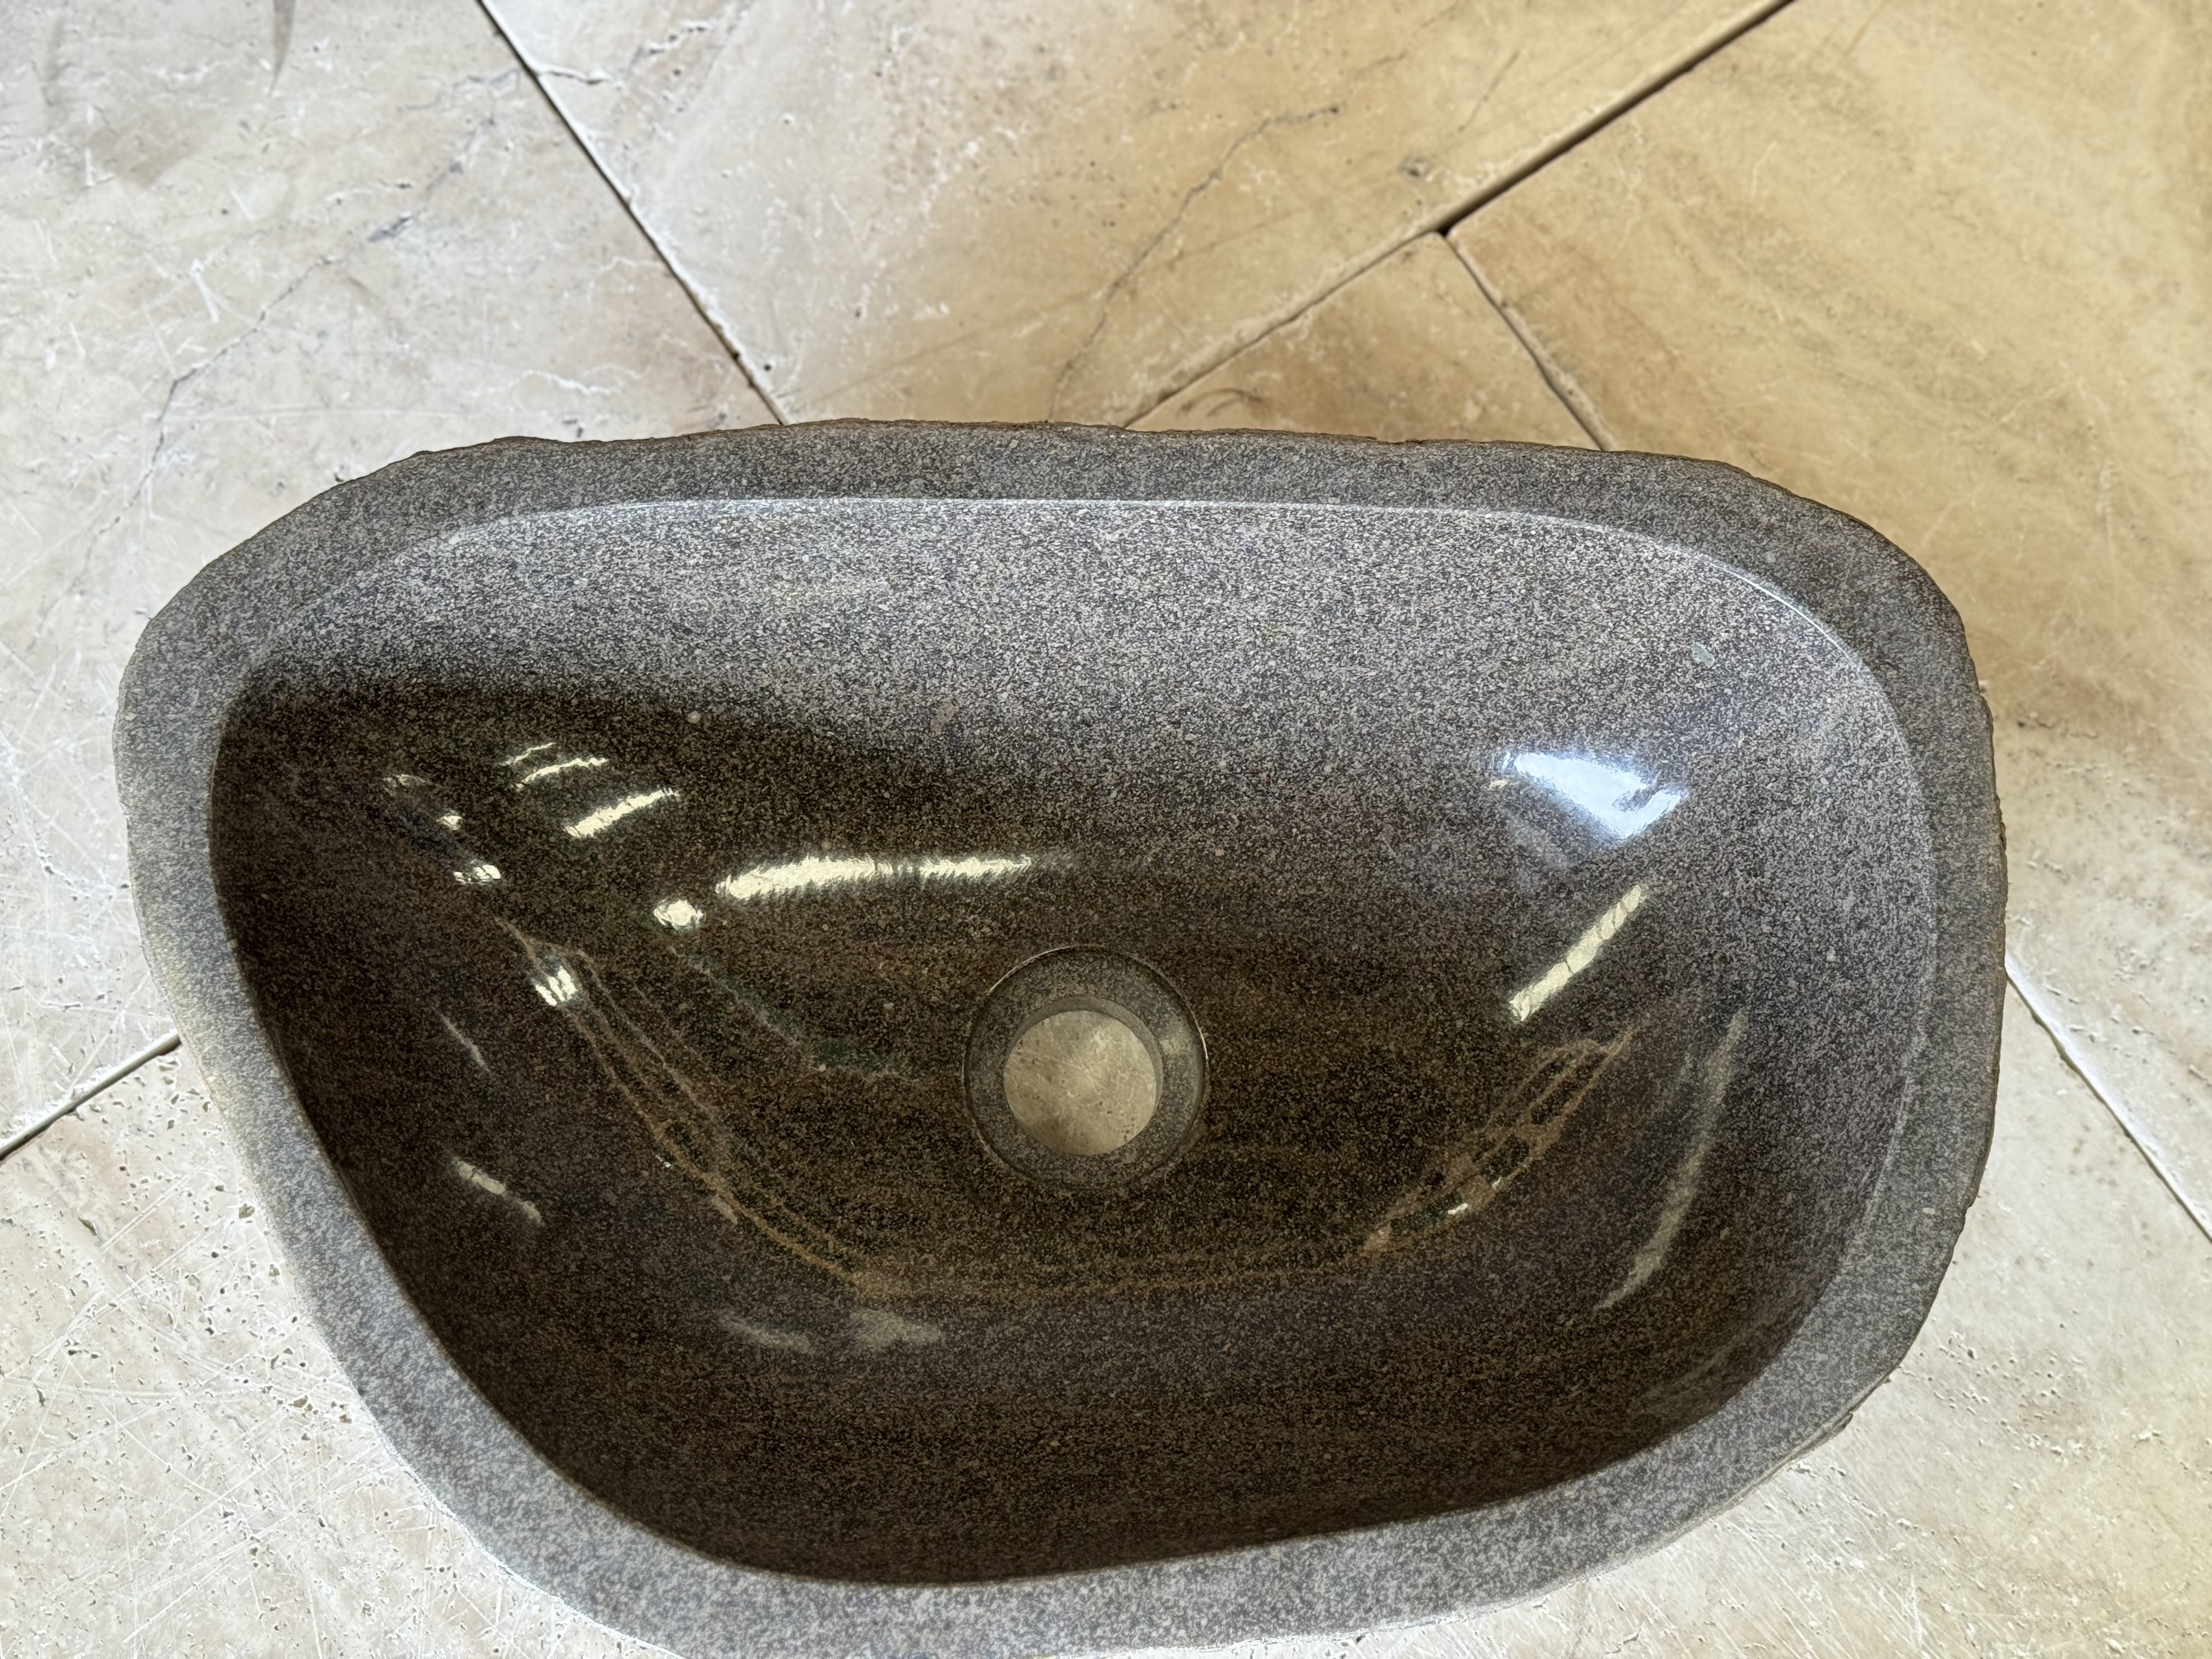 Handmade Natural Oval River Stone Bathroom Basin - RM2306143